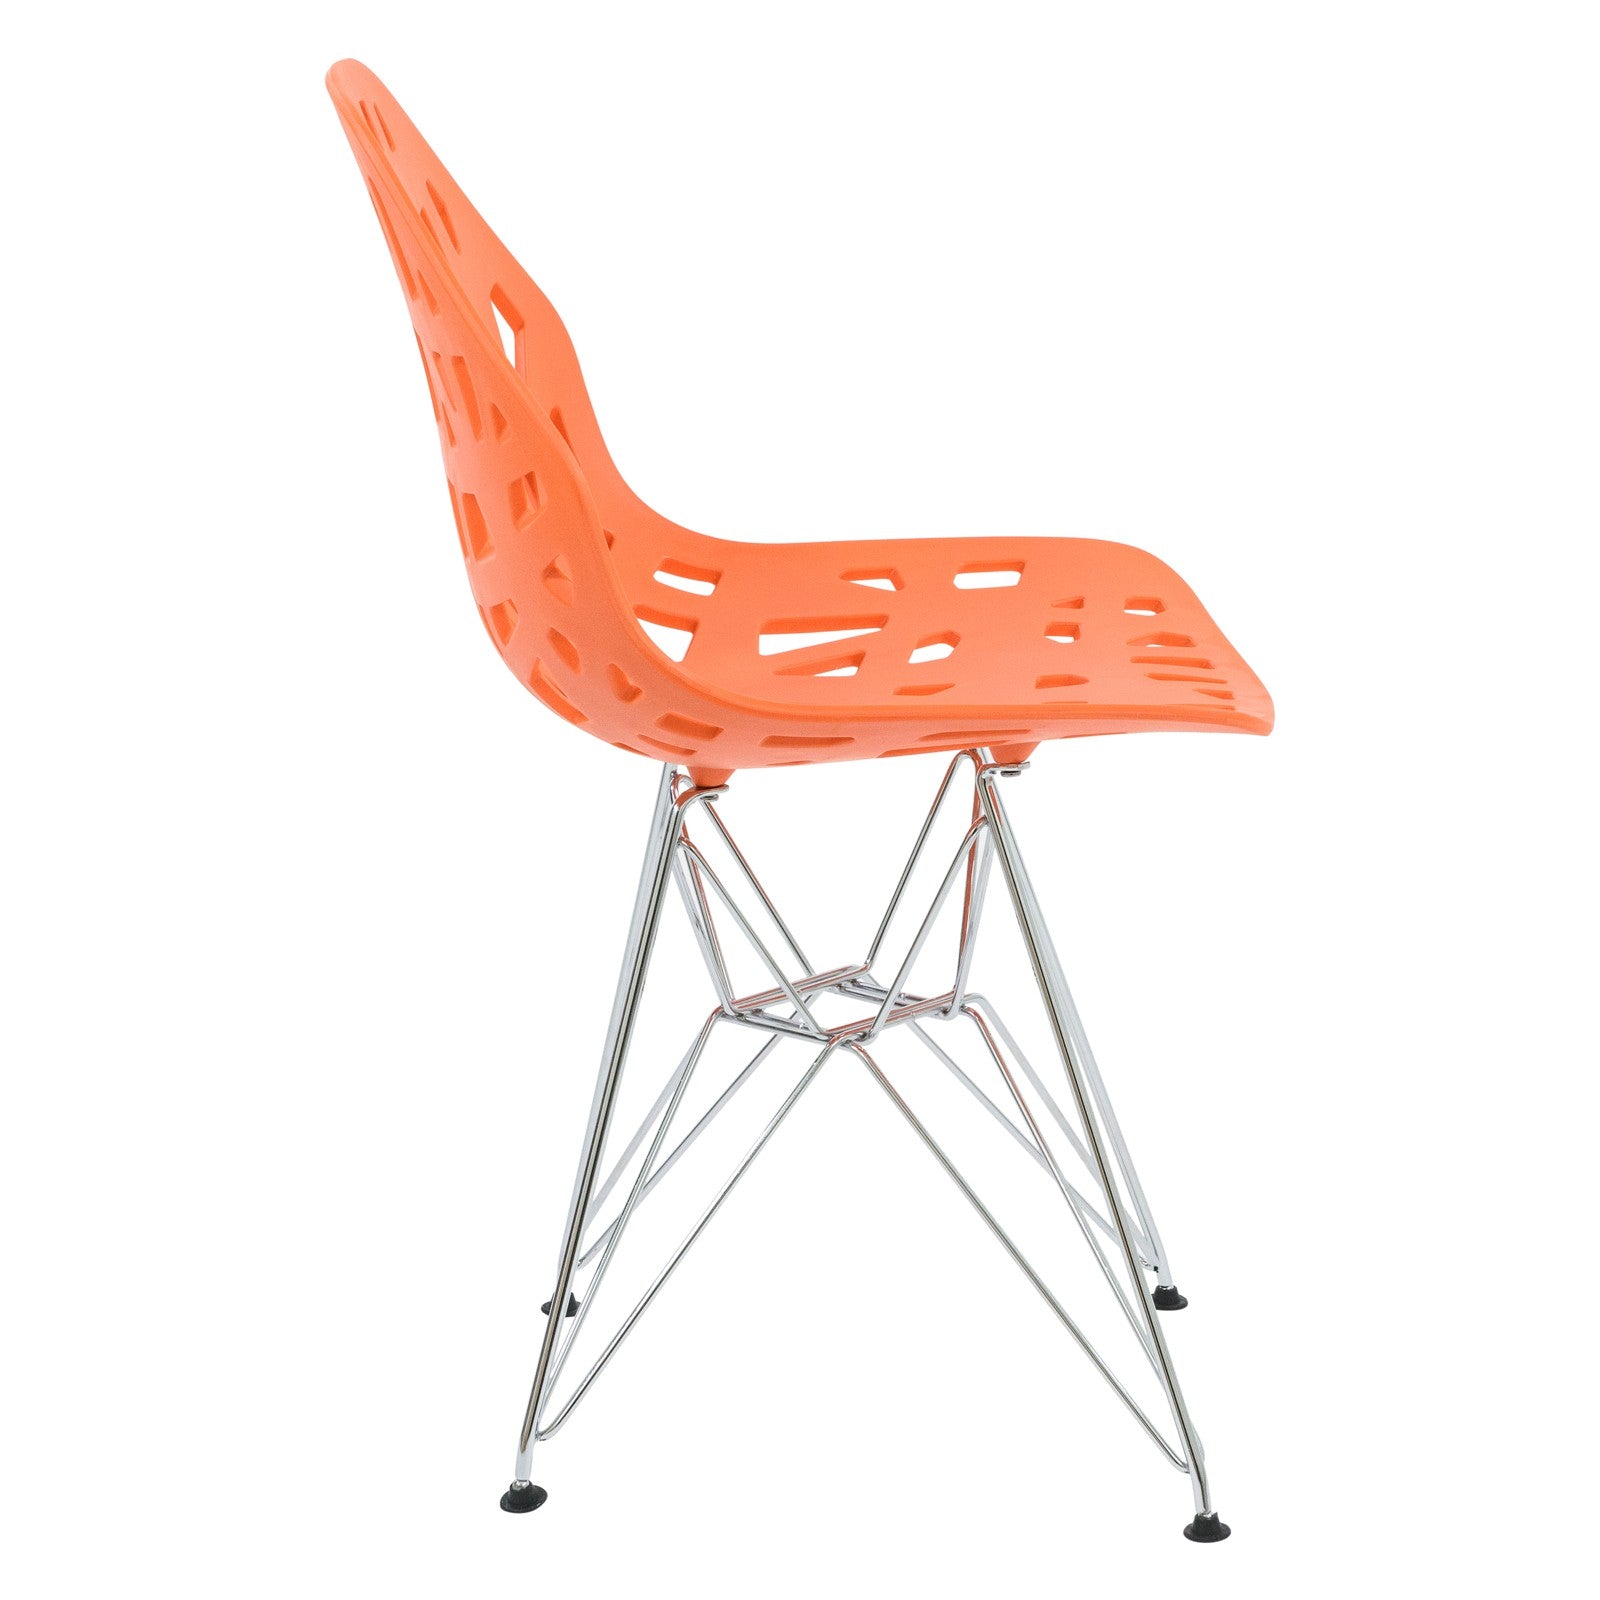 Akira Orange Chair with Chrome Legs - living-essentials